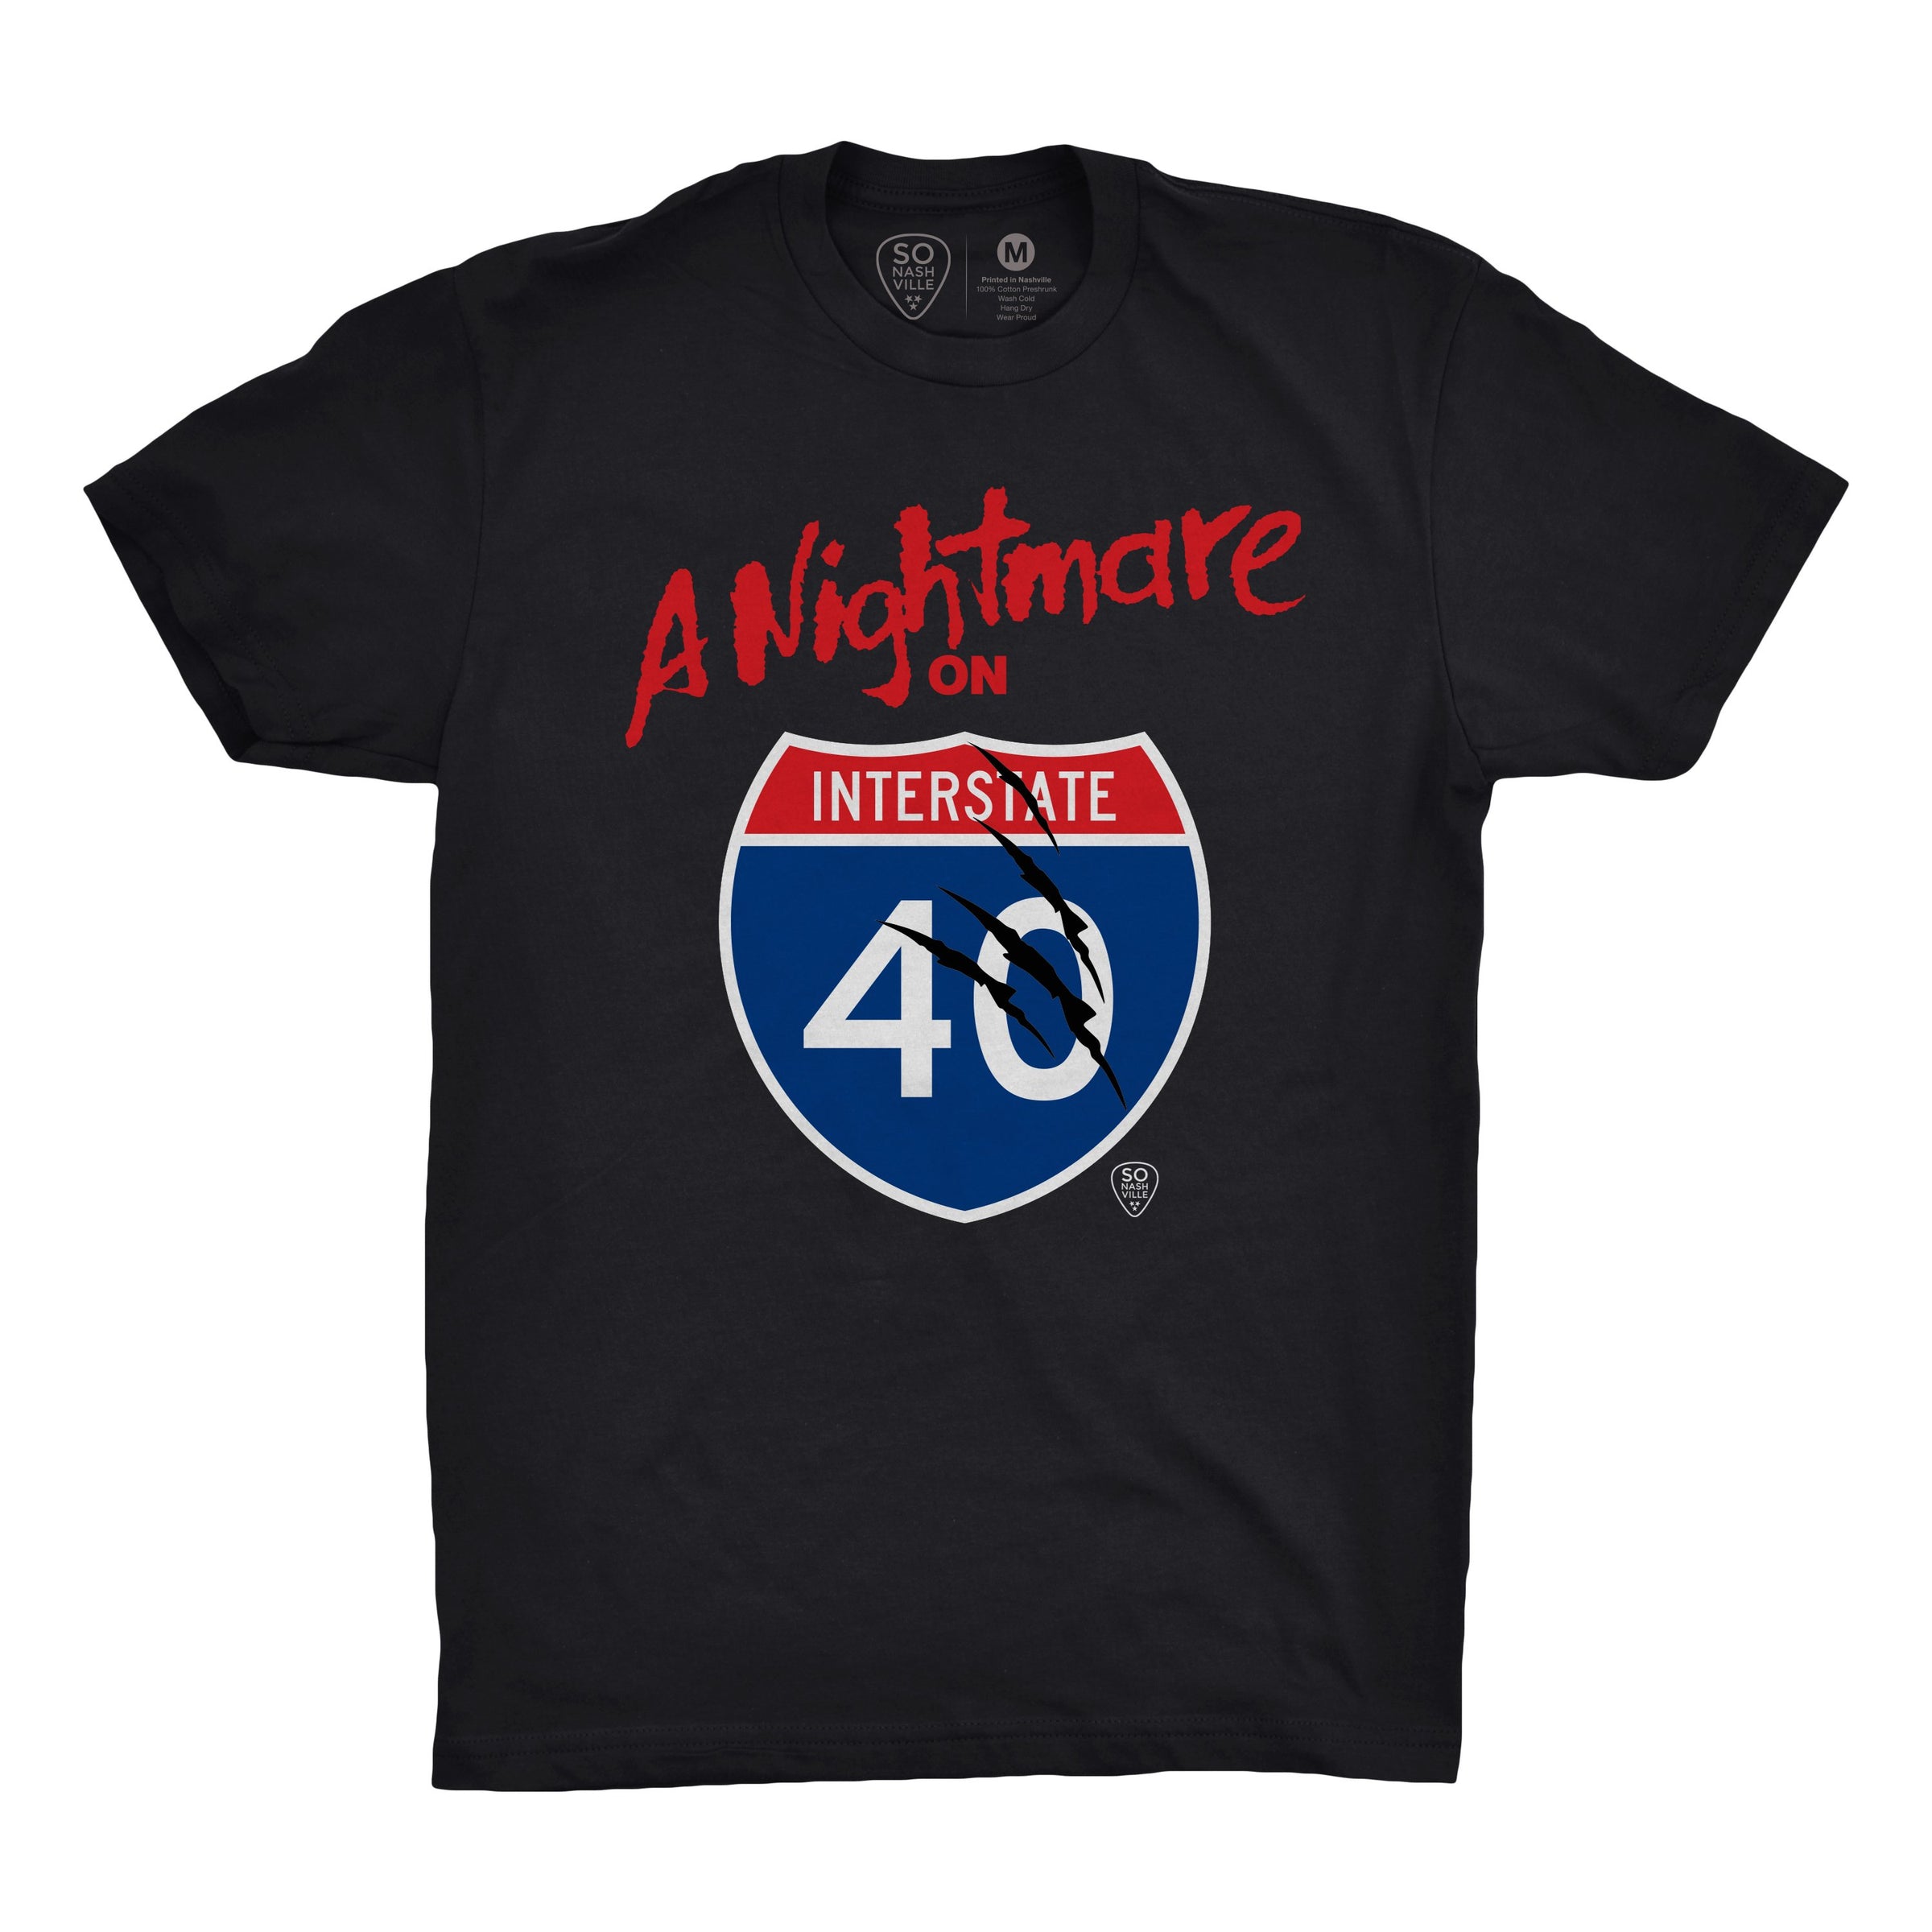 Nightmare on Interstate 40 - So Nashville Clothing